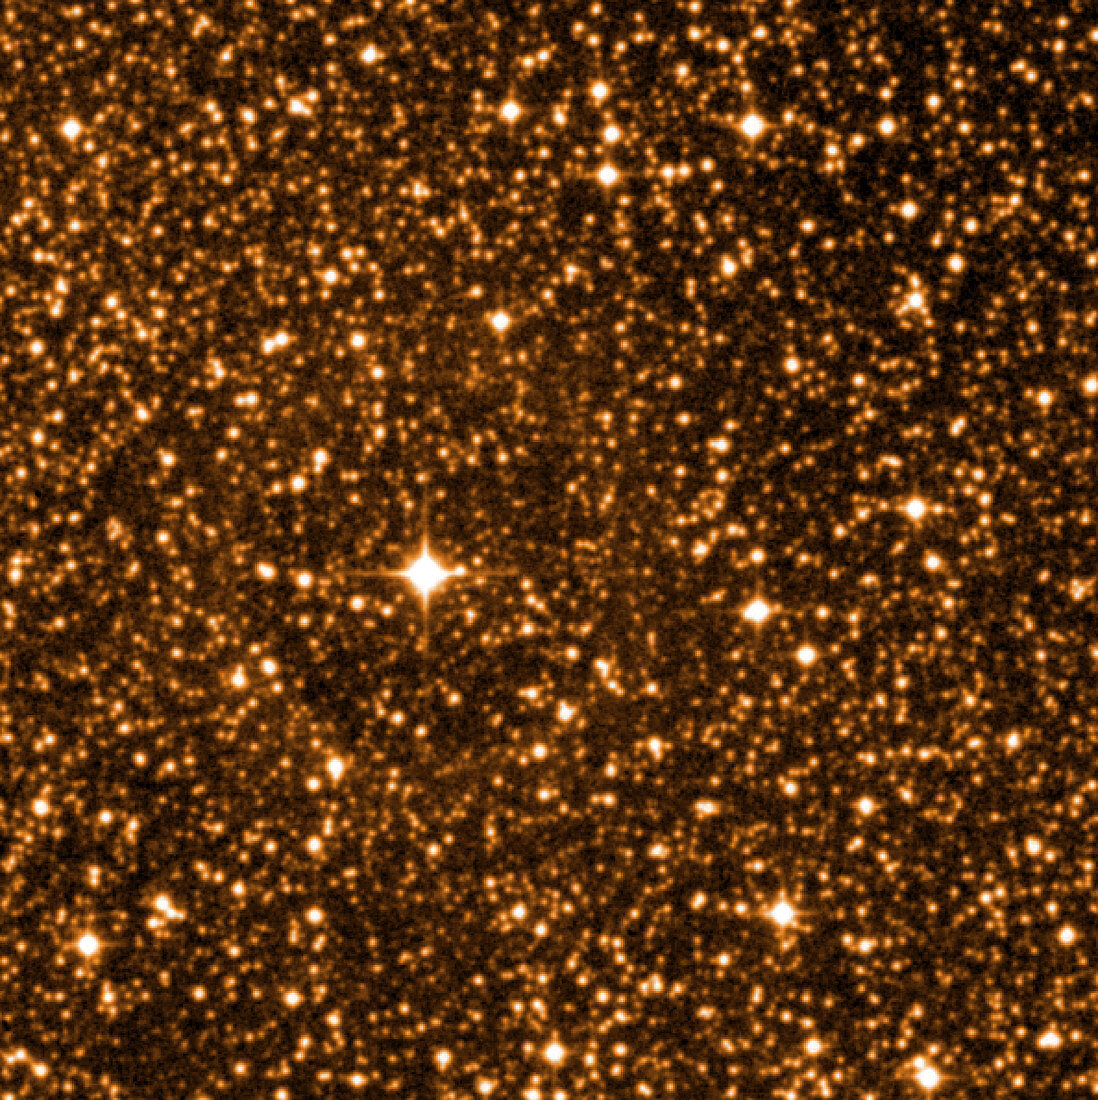 Red dwarf,infrared image